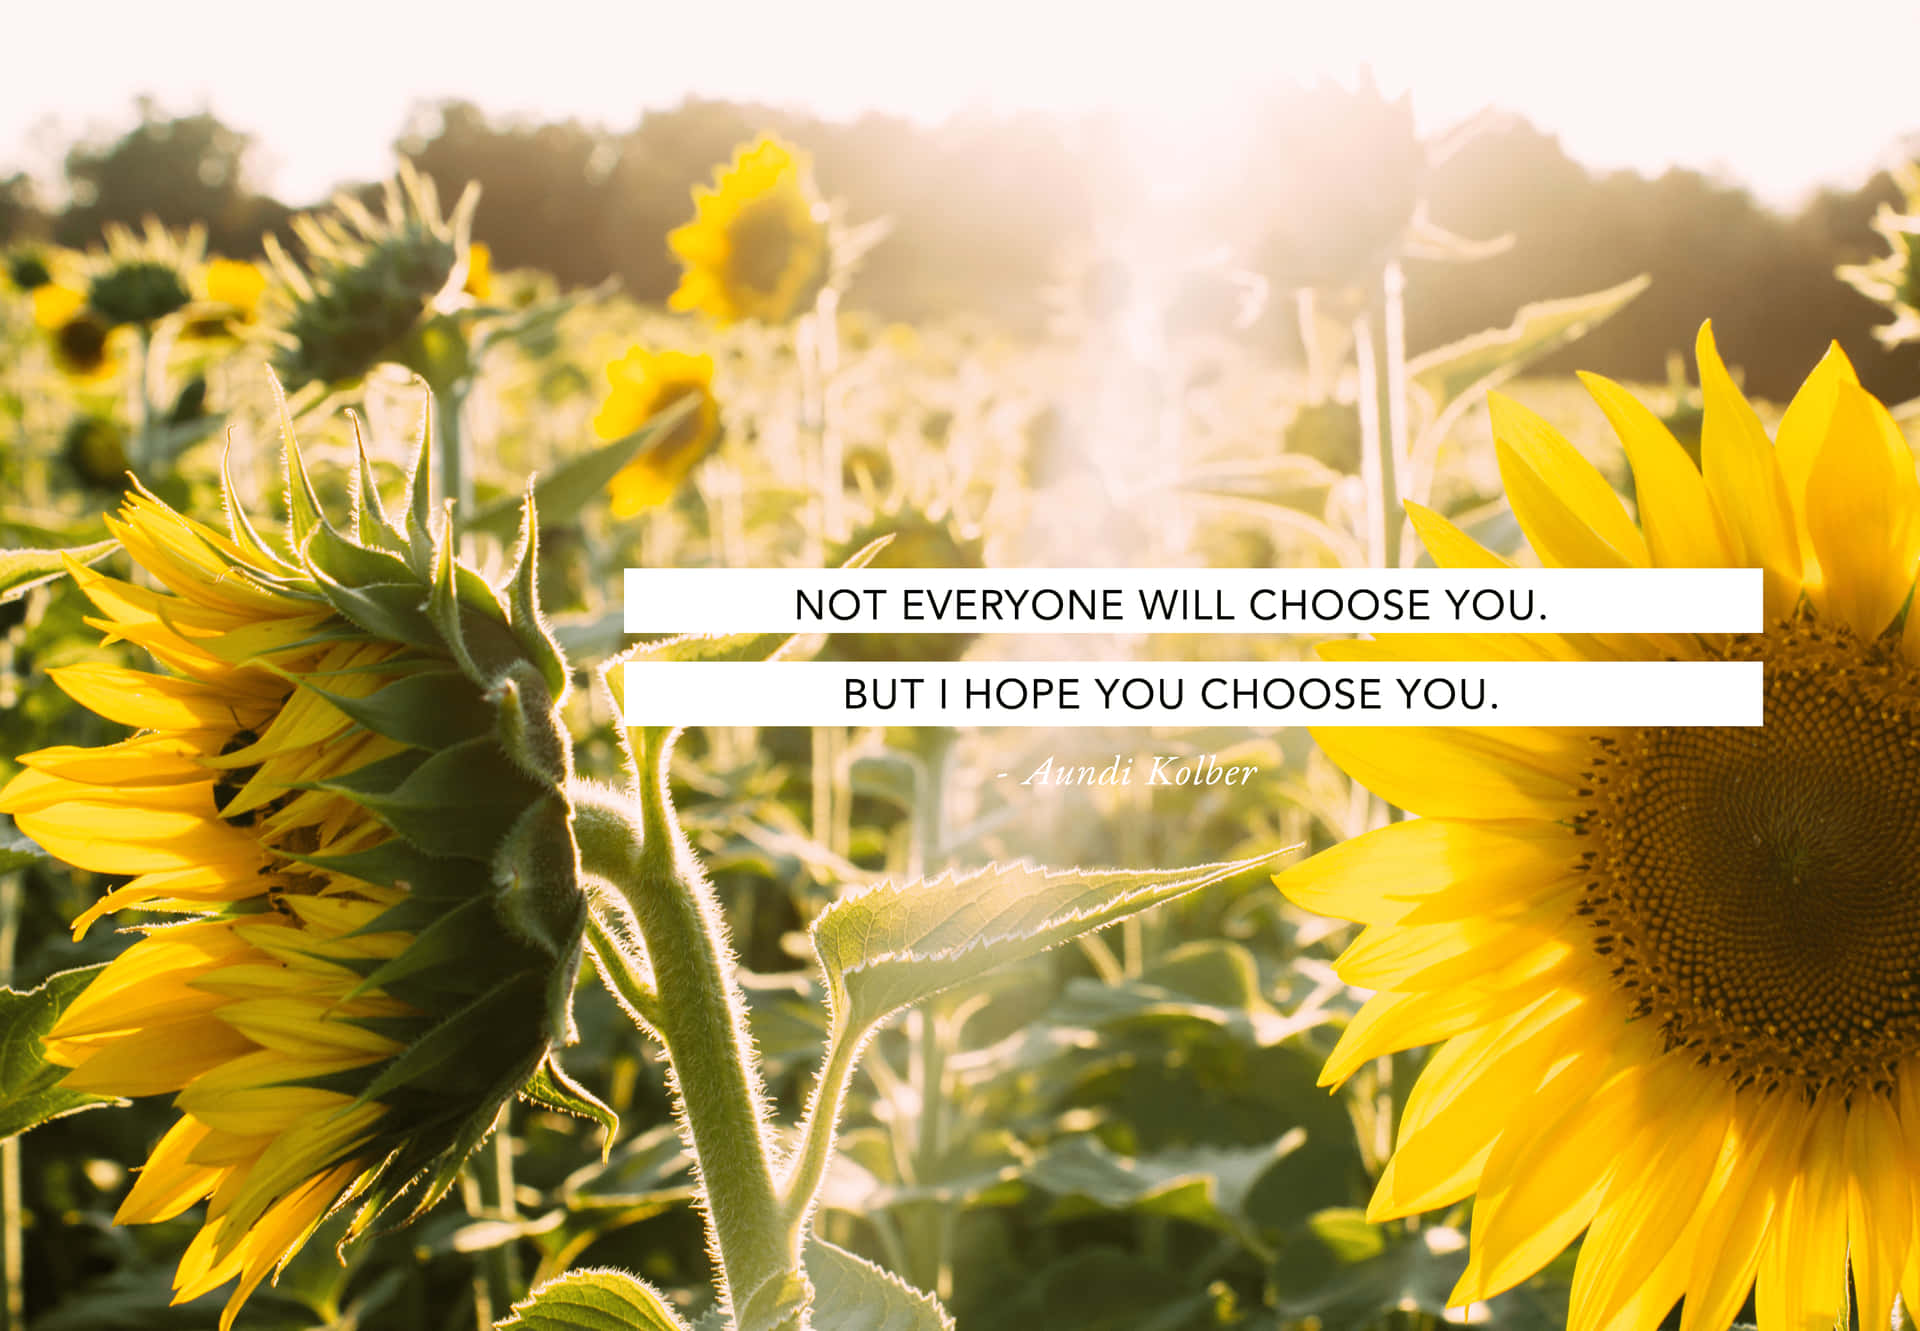 “Sunflowers bring cheerful vibes.” Wallpaper